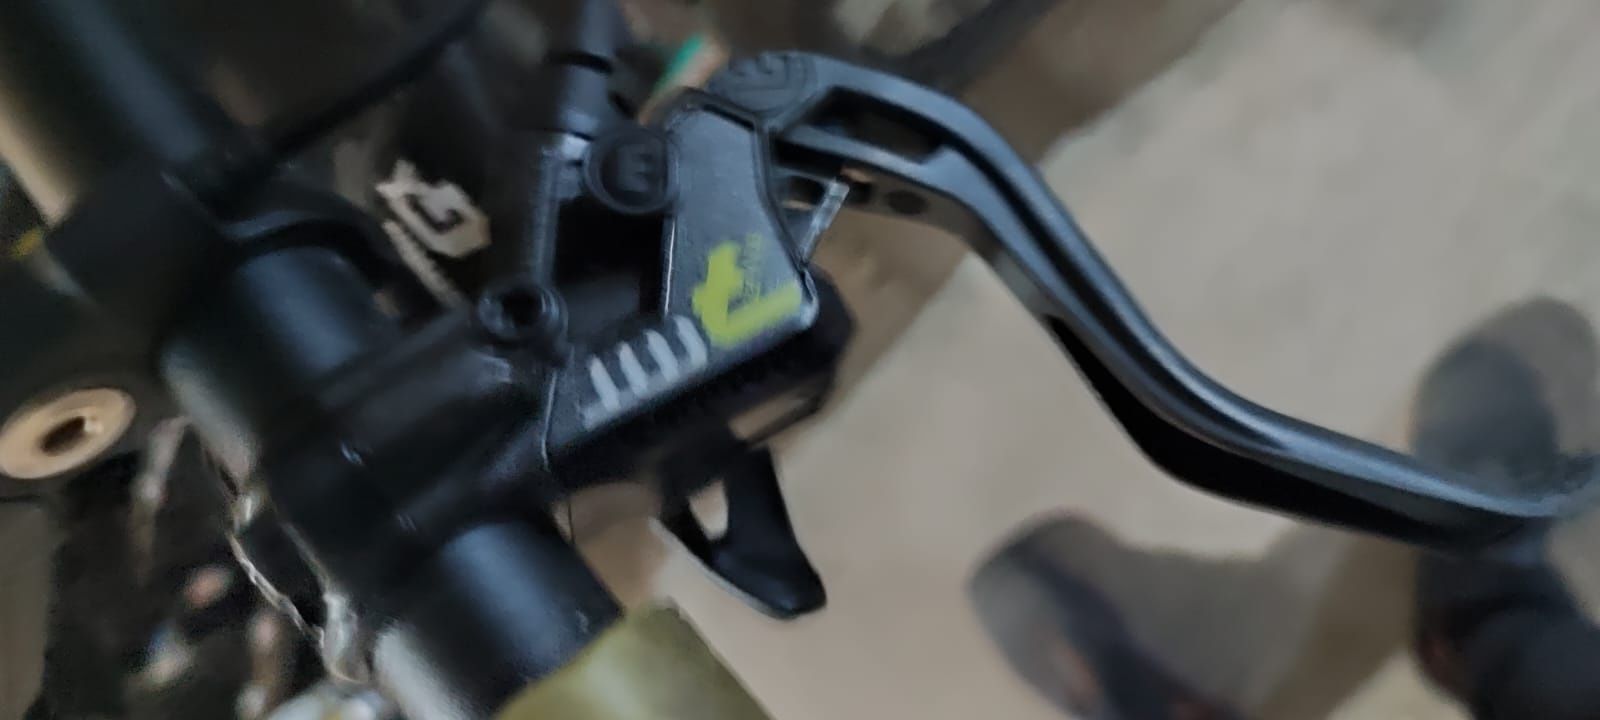 Reparatii biciclete electrice